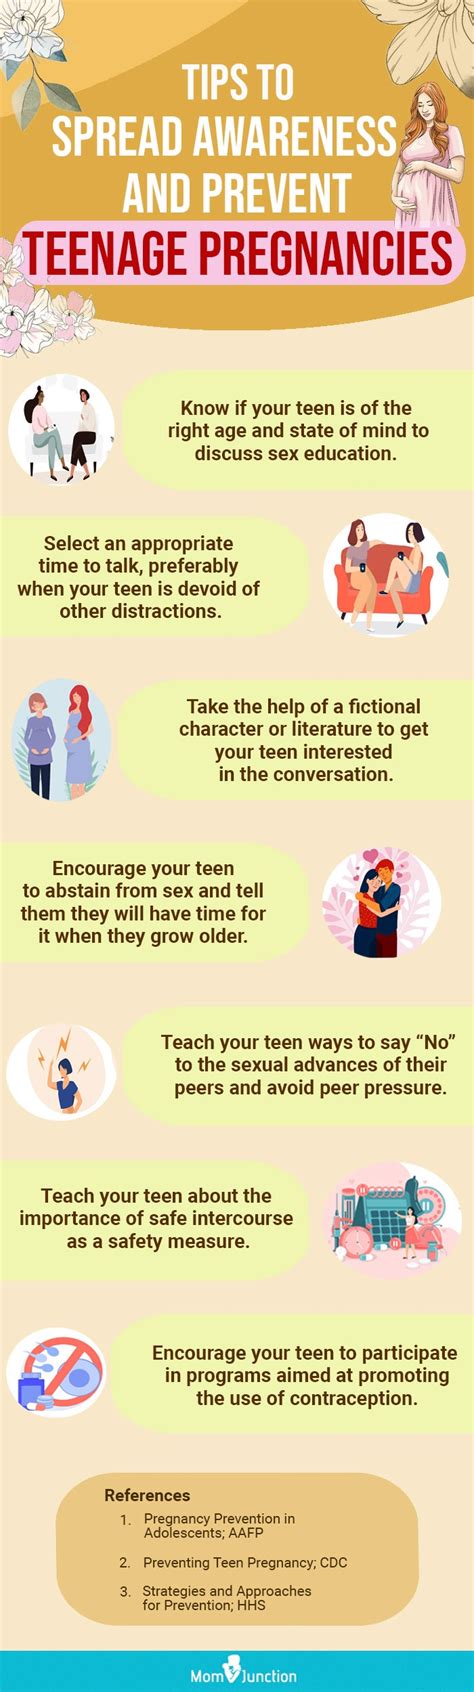 12 practical ways to prevent teenage pregnancy